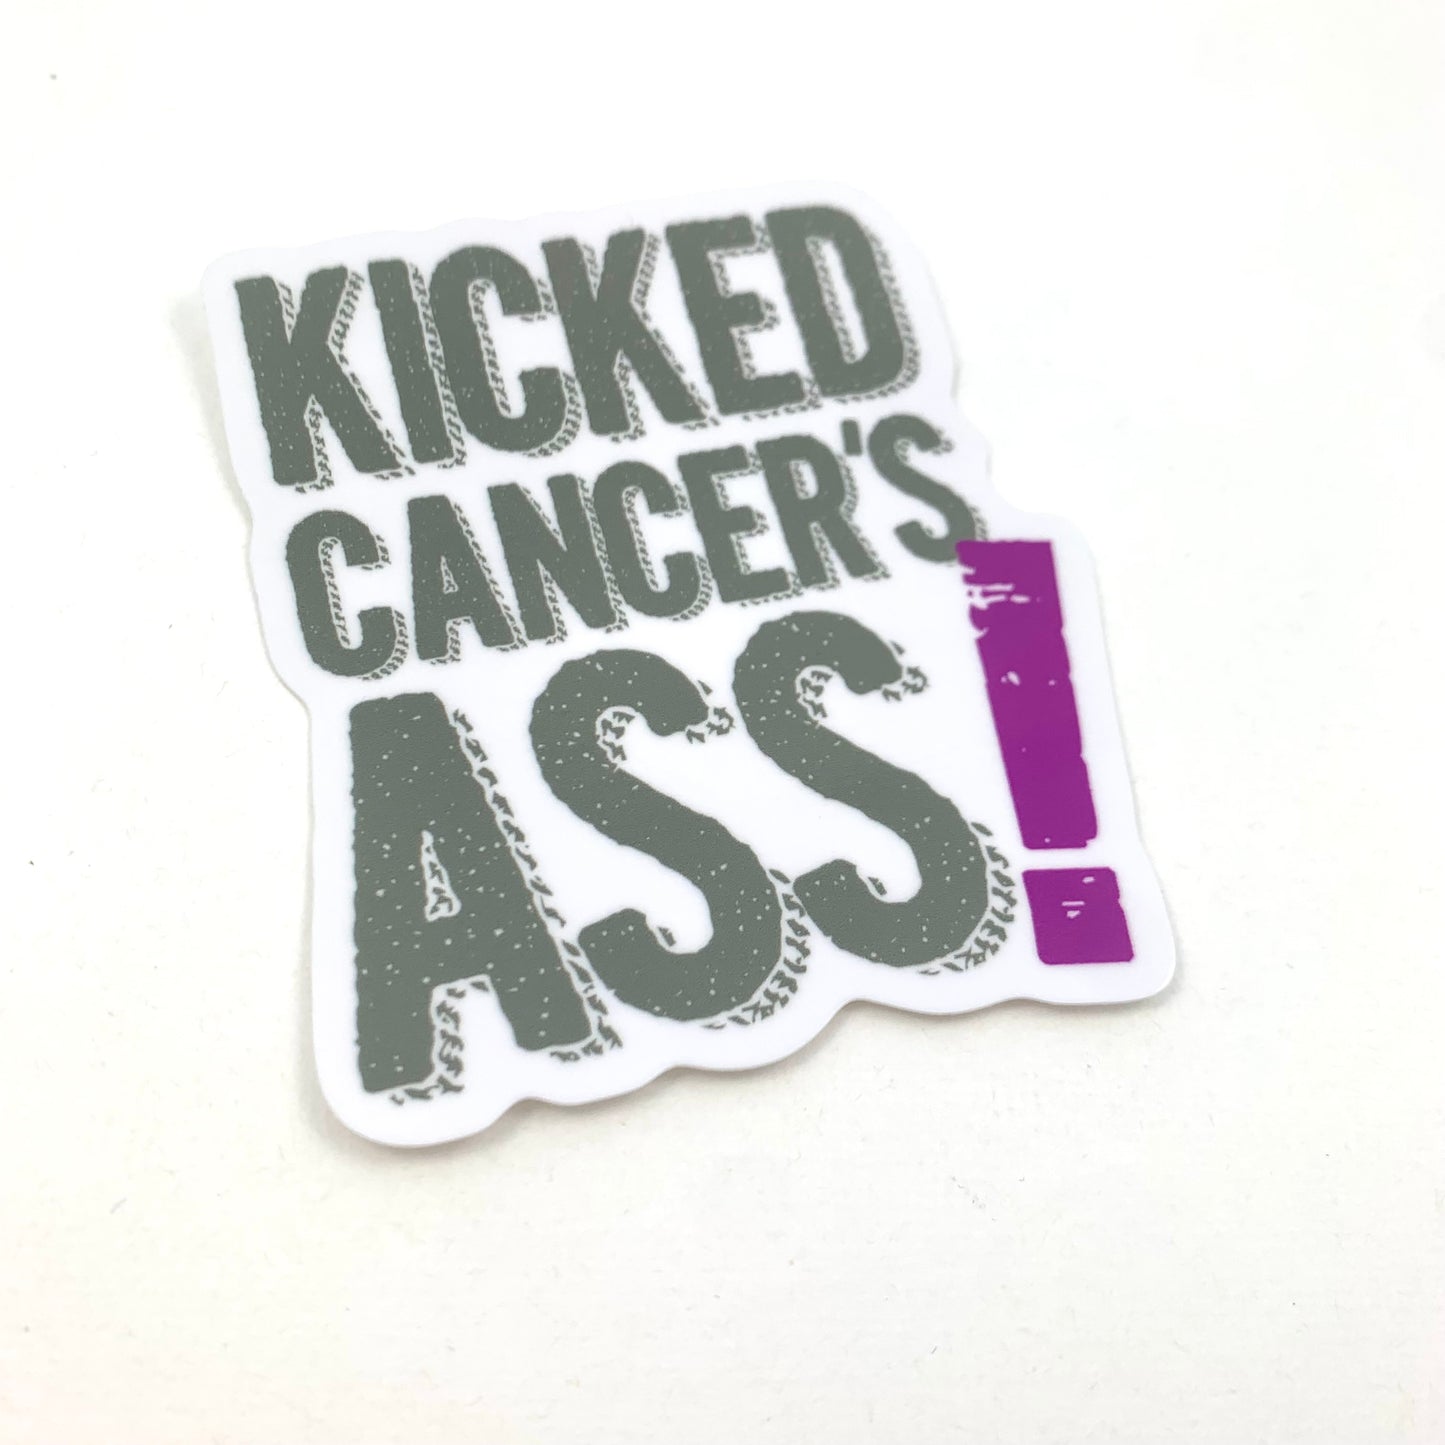 Kicked Cancer’s Ass vinyl sticker